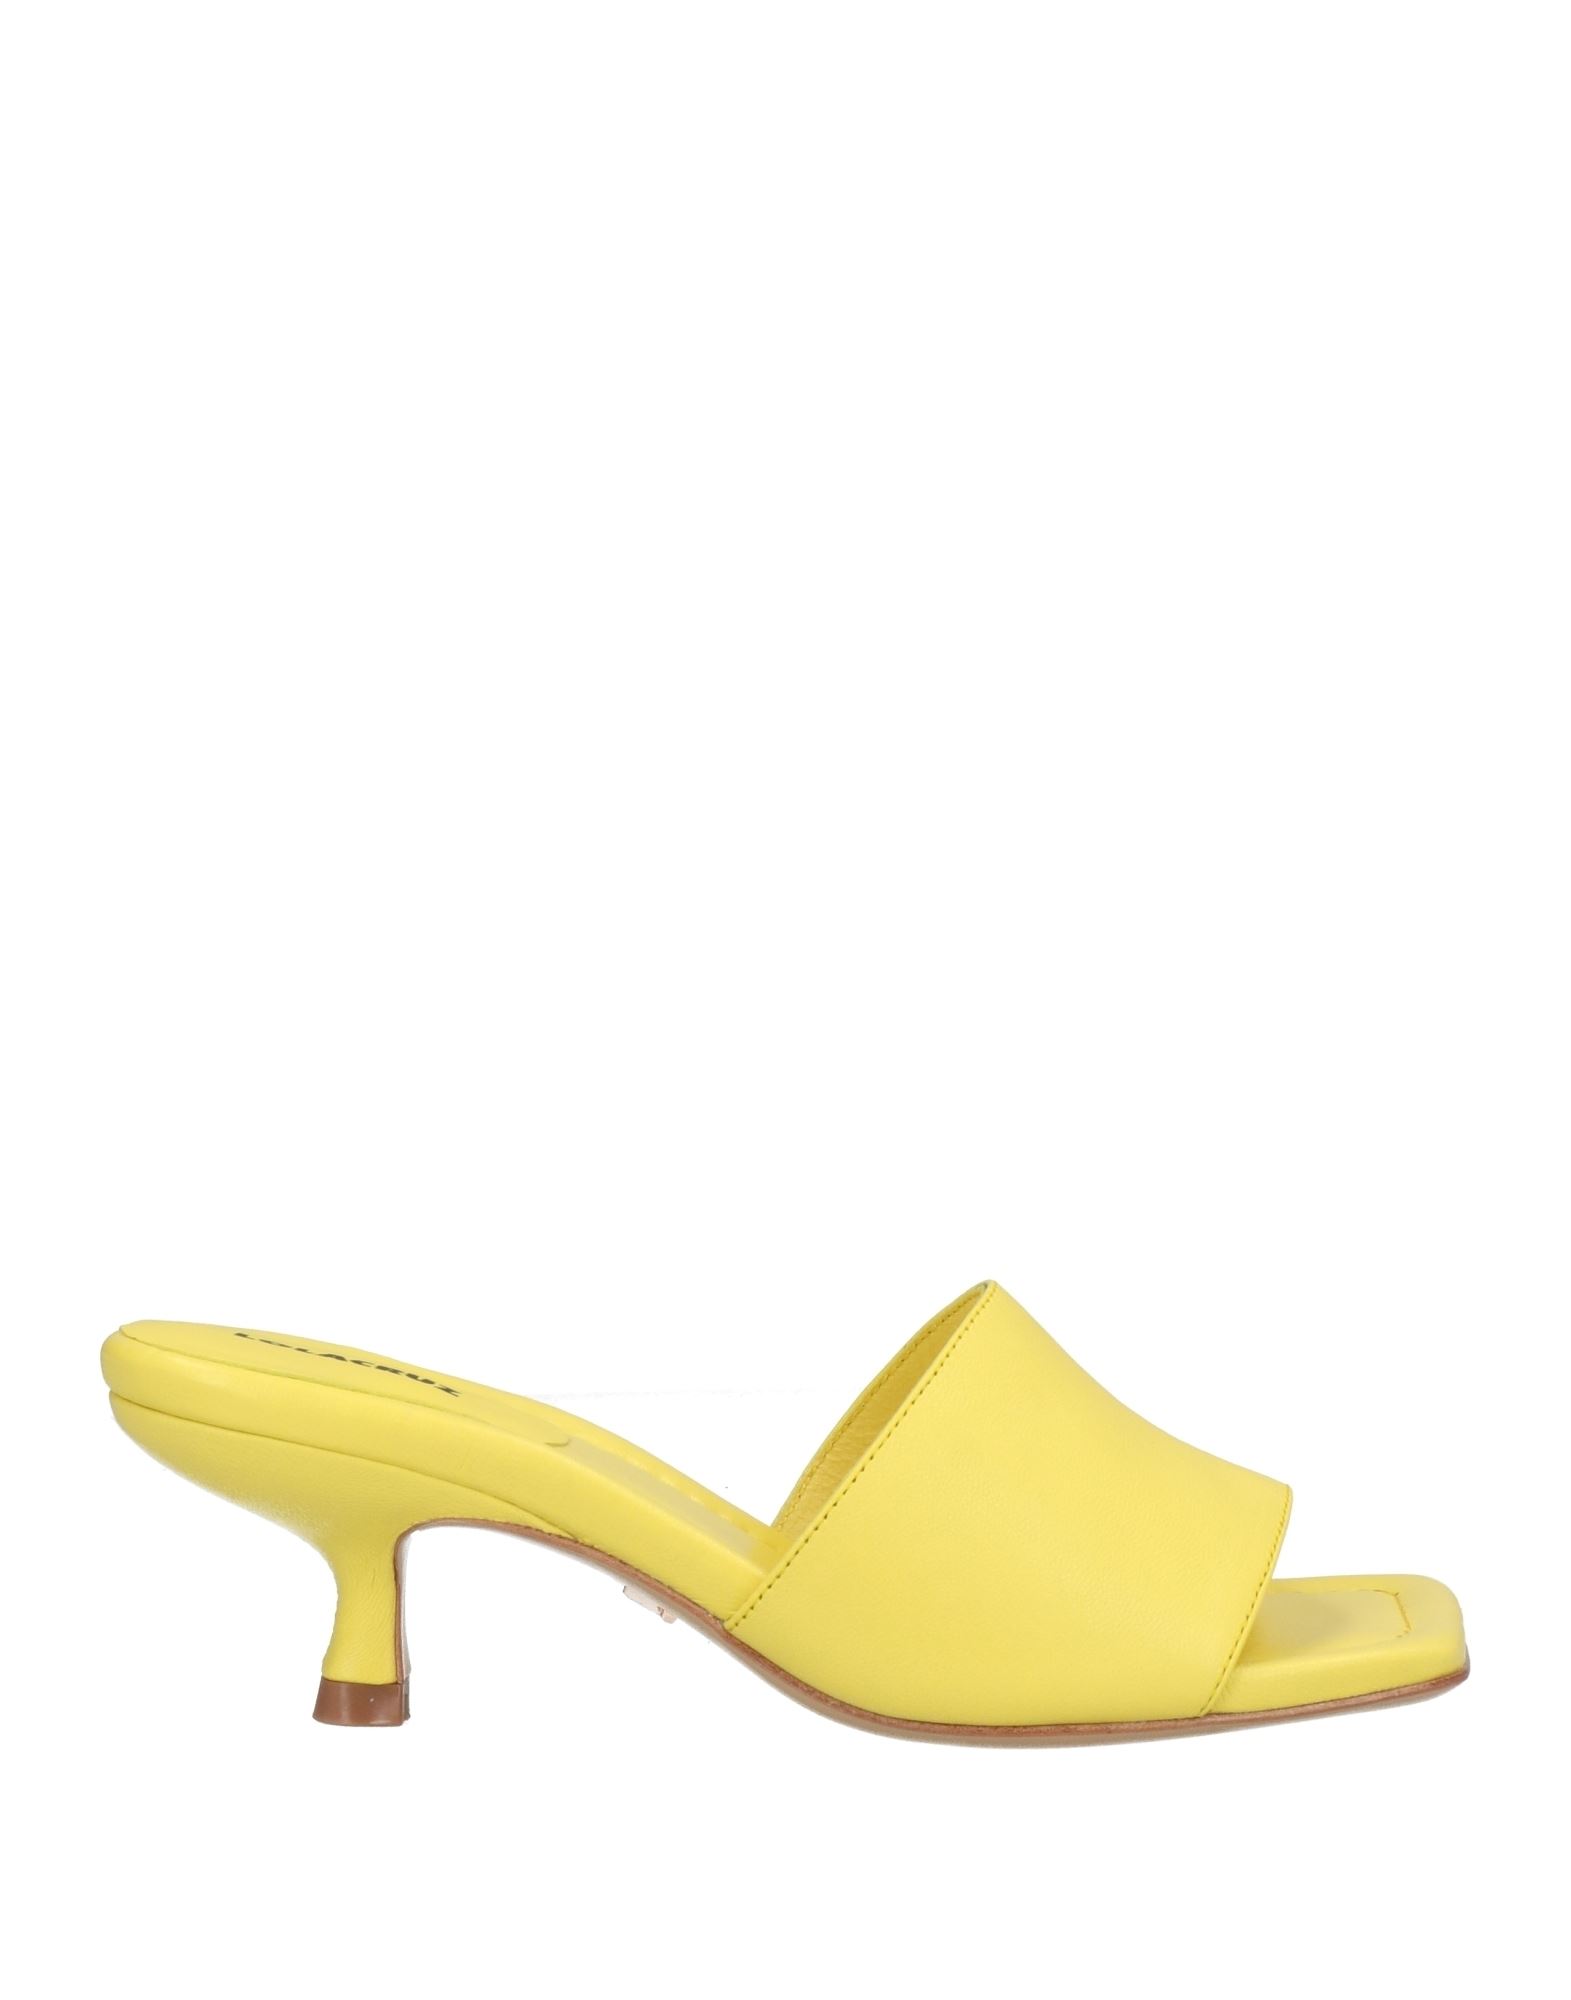 Lola Cruz Sandals In Yellow